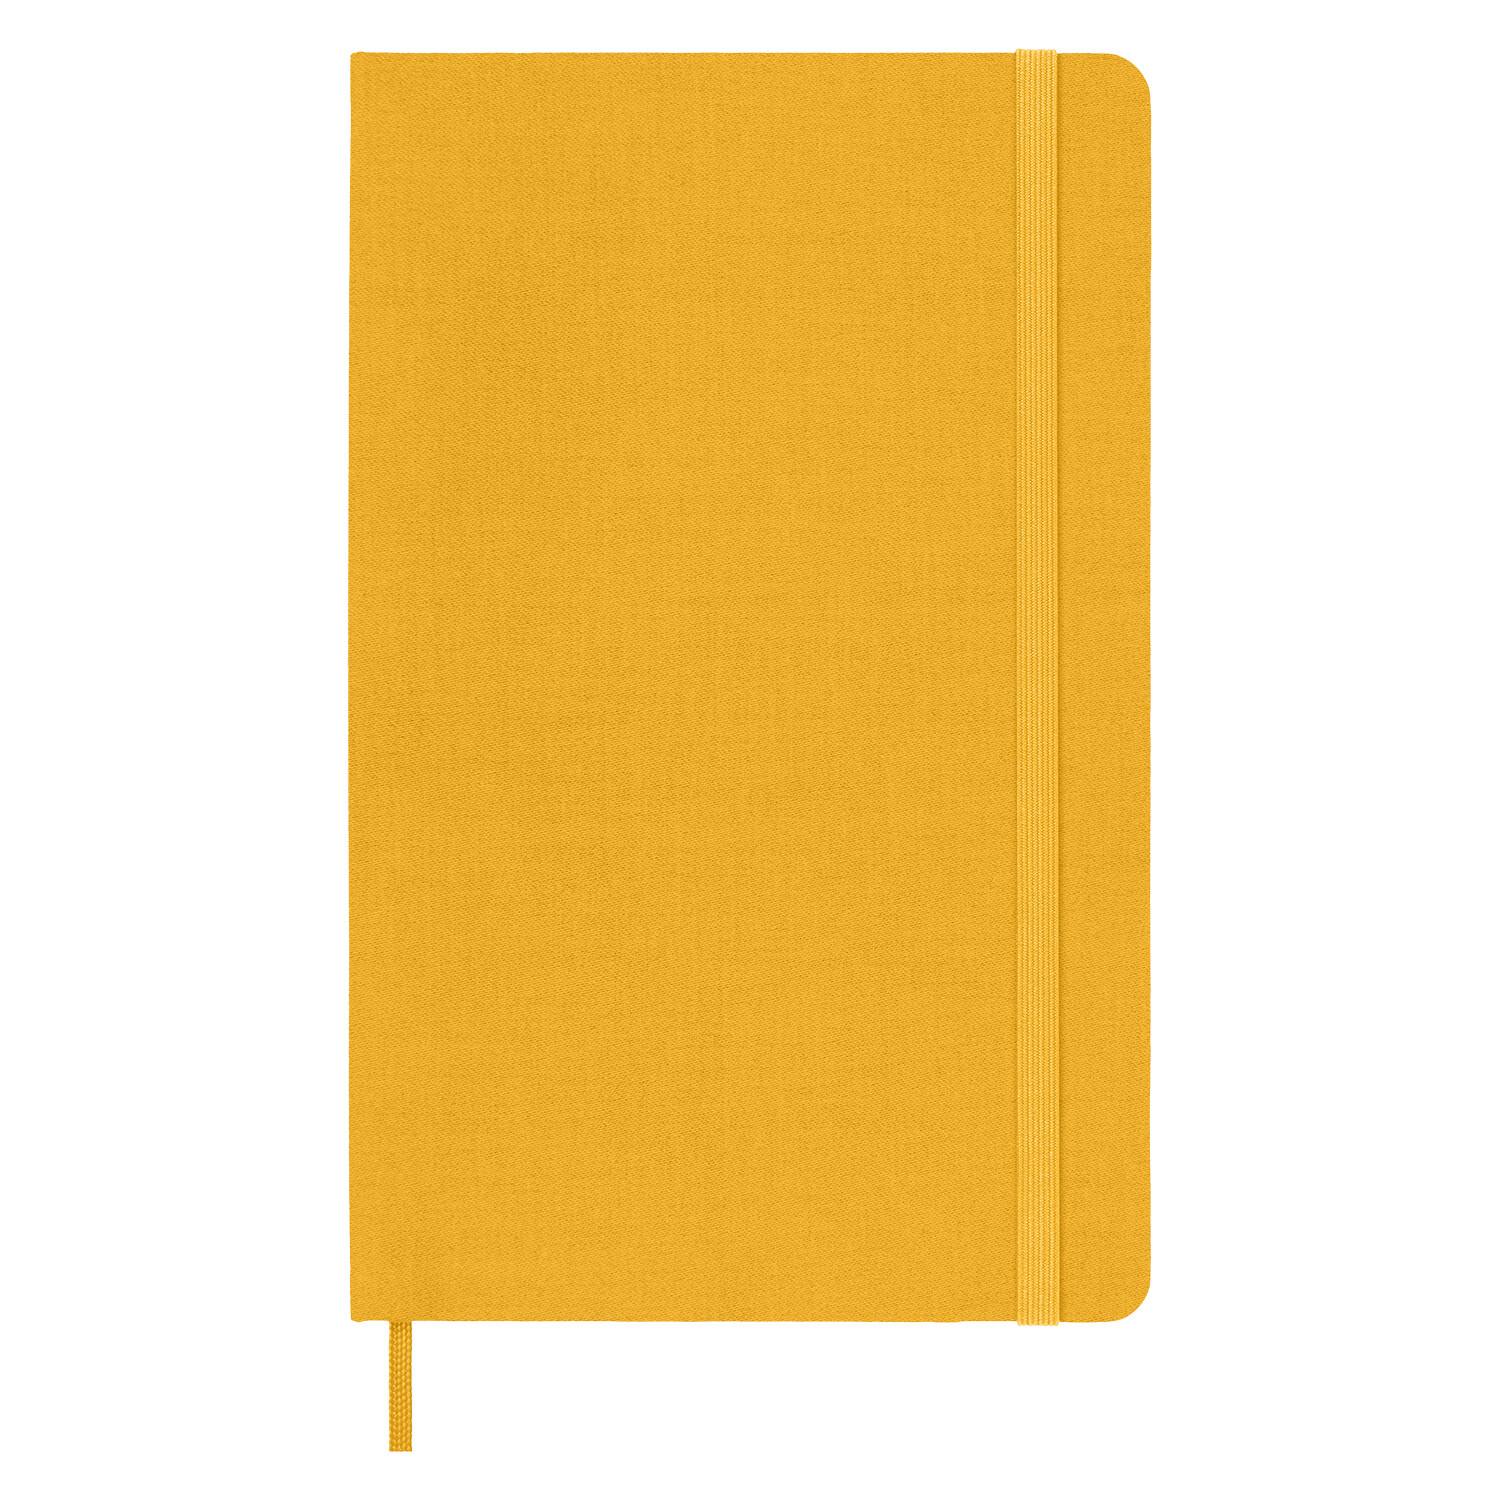 Moleskine Classic Notebook, Large, Ruled, Orange Yellow, Silk Hard Cover (5 X 8.25) (Hardcover)